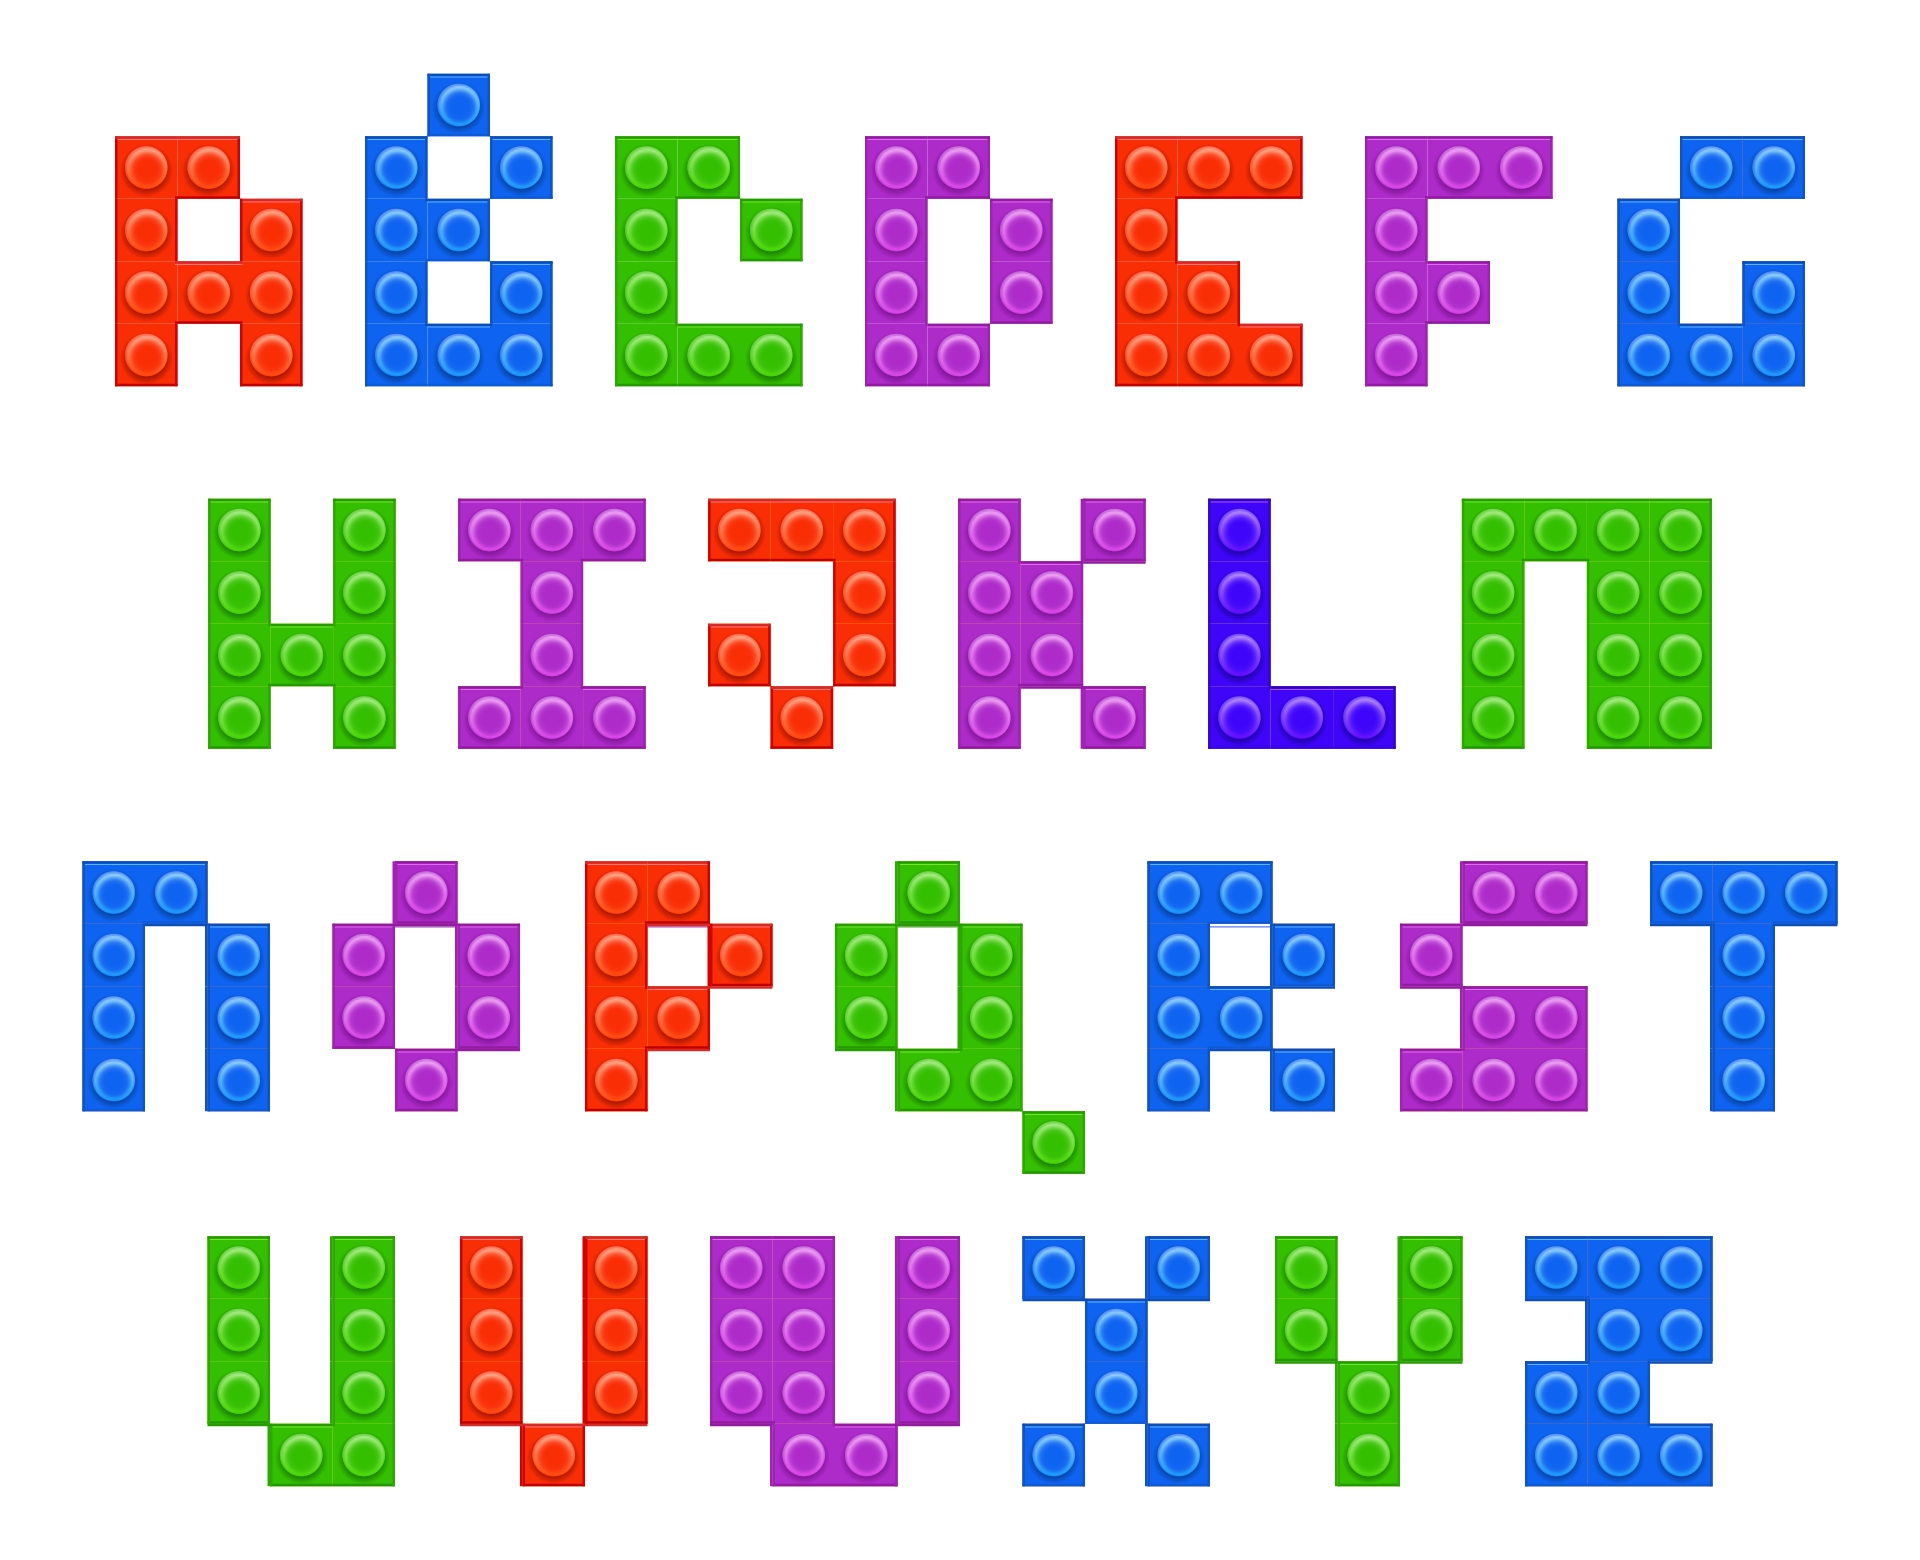 Printable LEGO Letters Alphabet